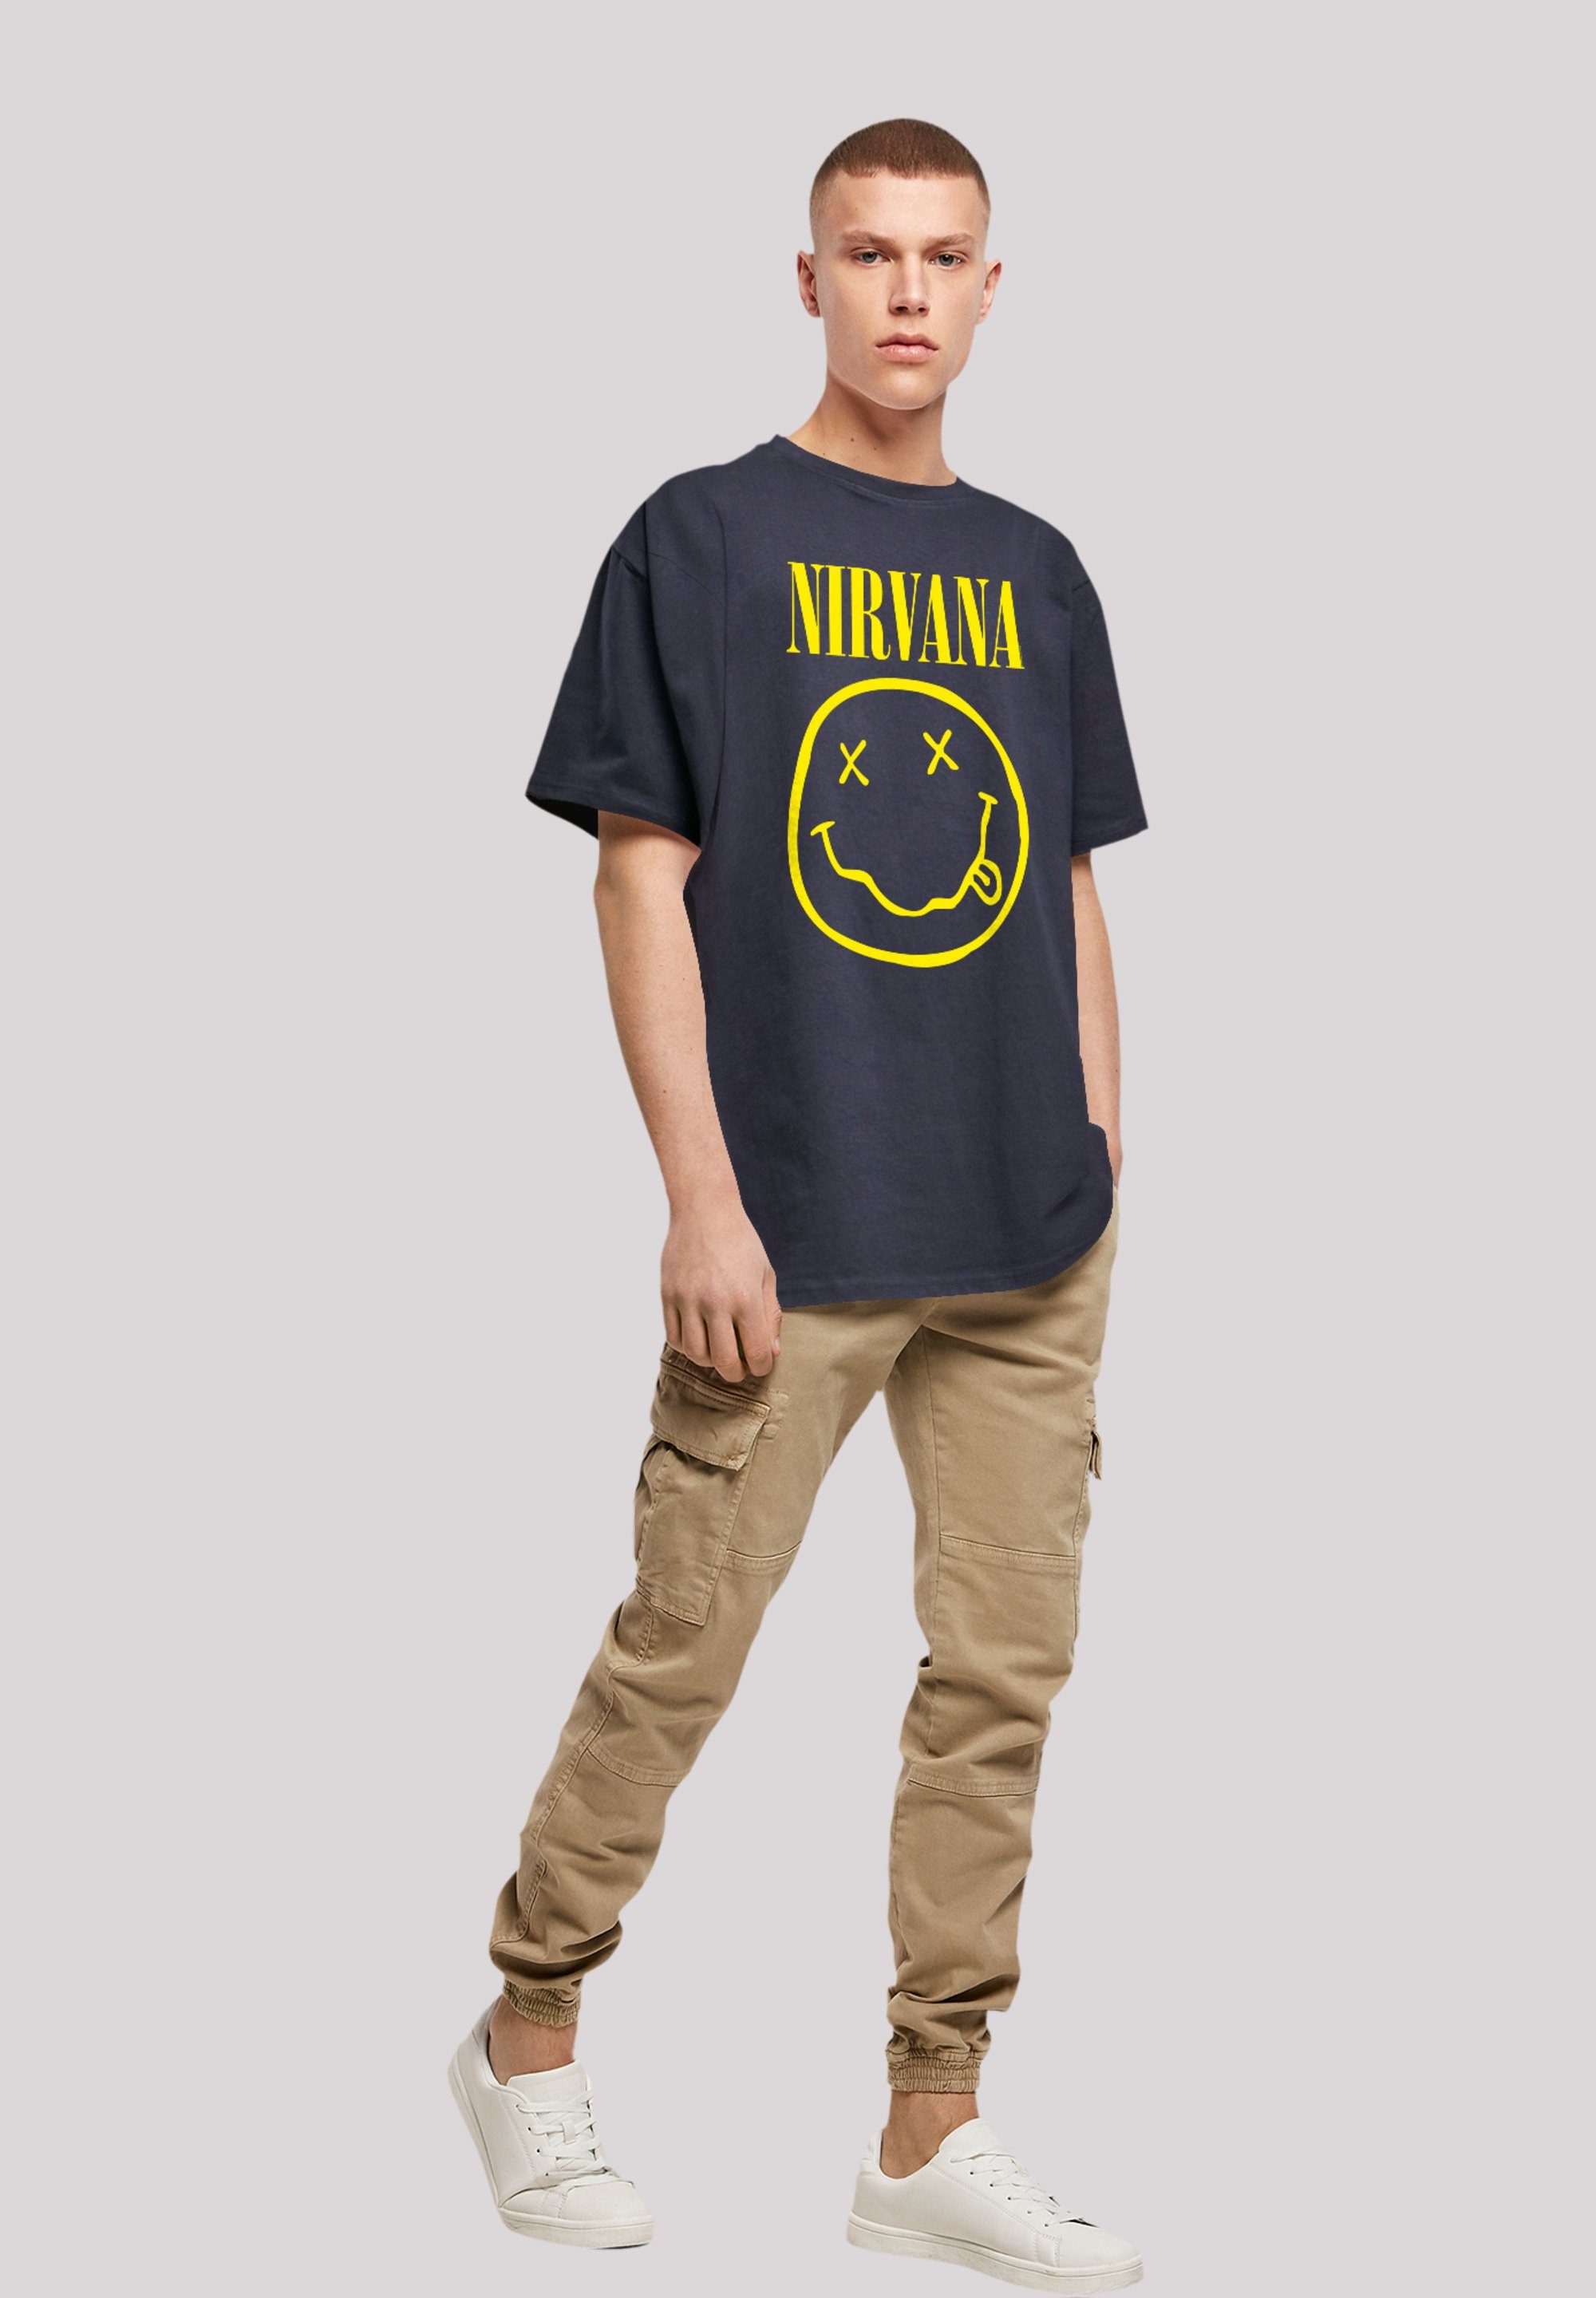 Qualität Yellow Happy Face Nirvana Rock F4NT4STIC navy Premium Band T-Shirt